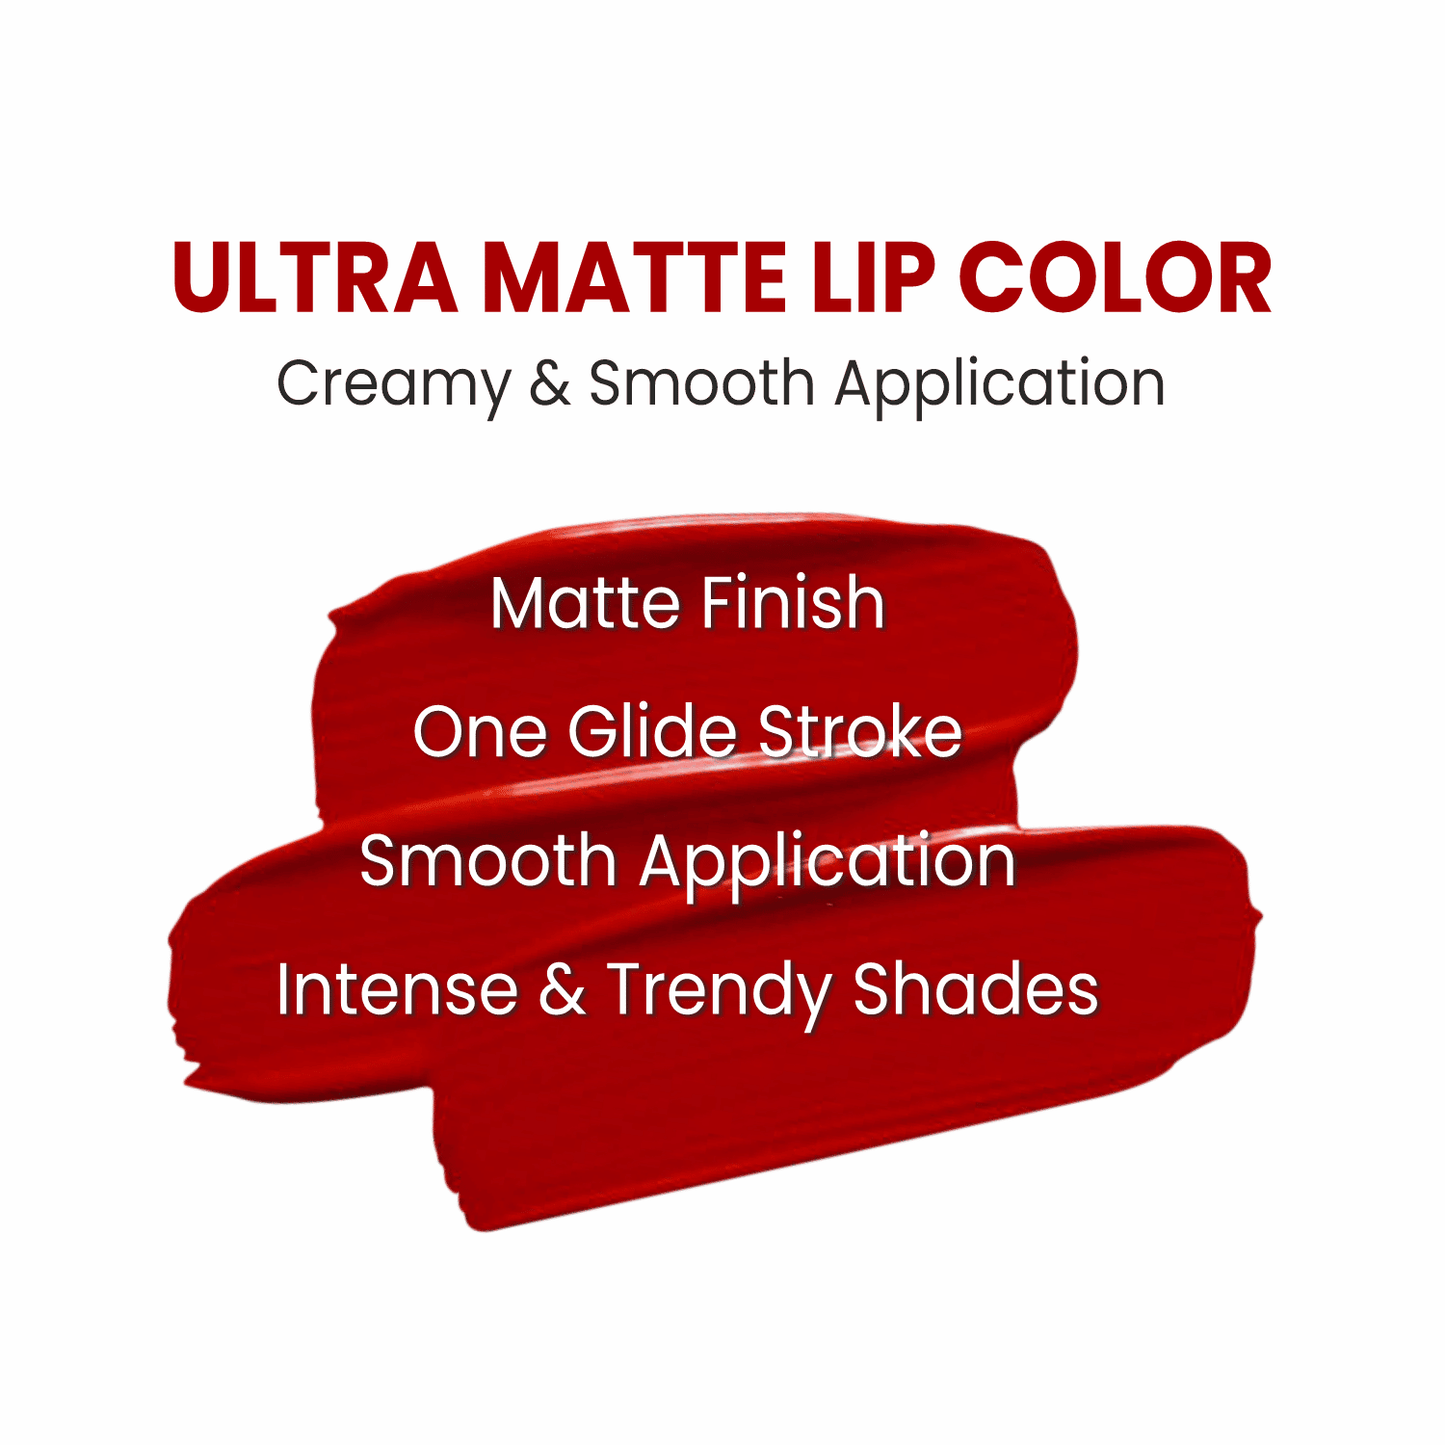 Ultra Matte Lip Color - 15 Vintage